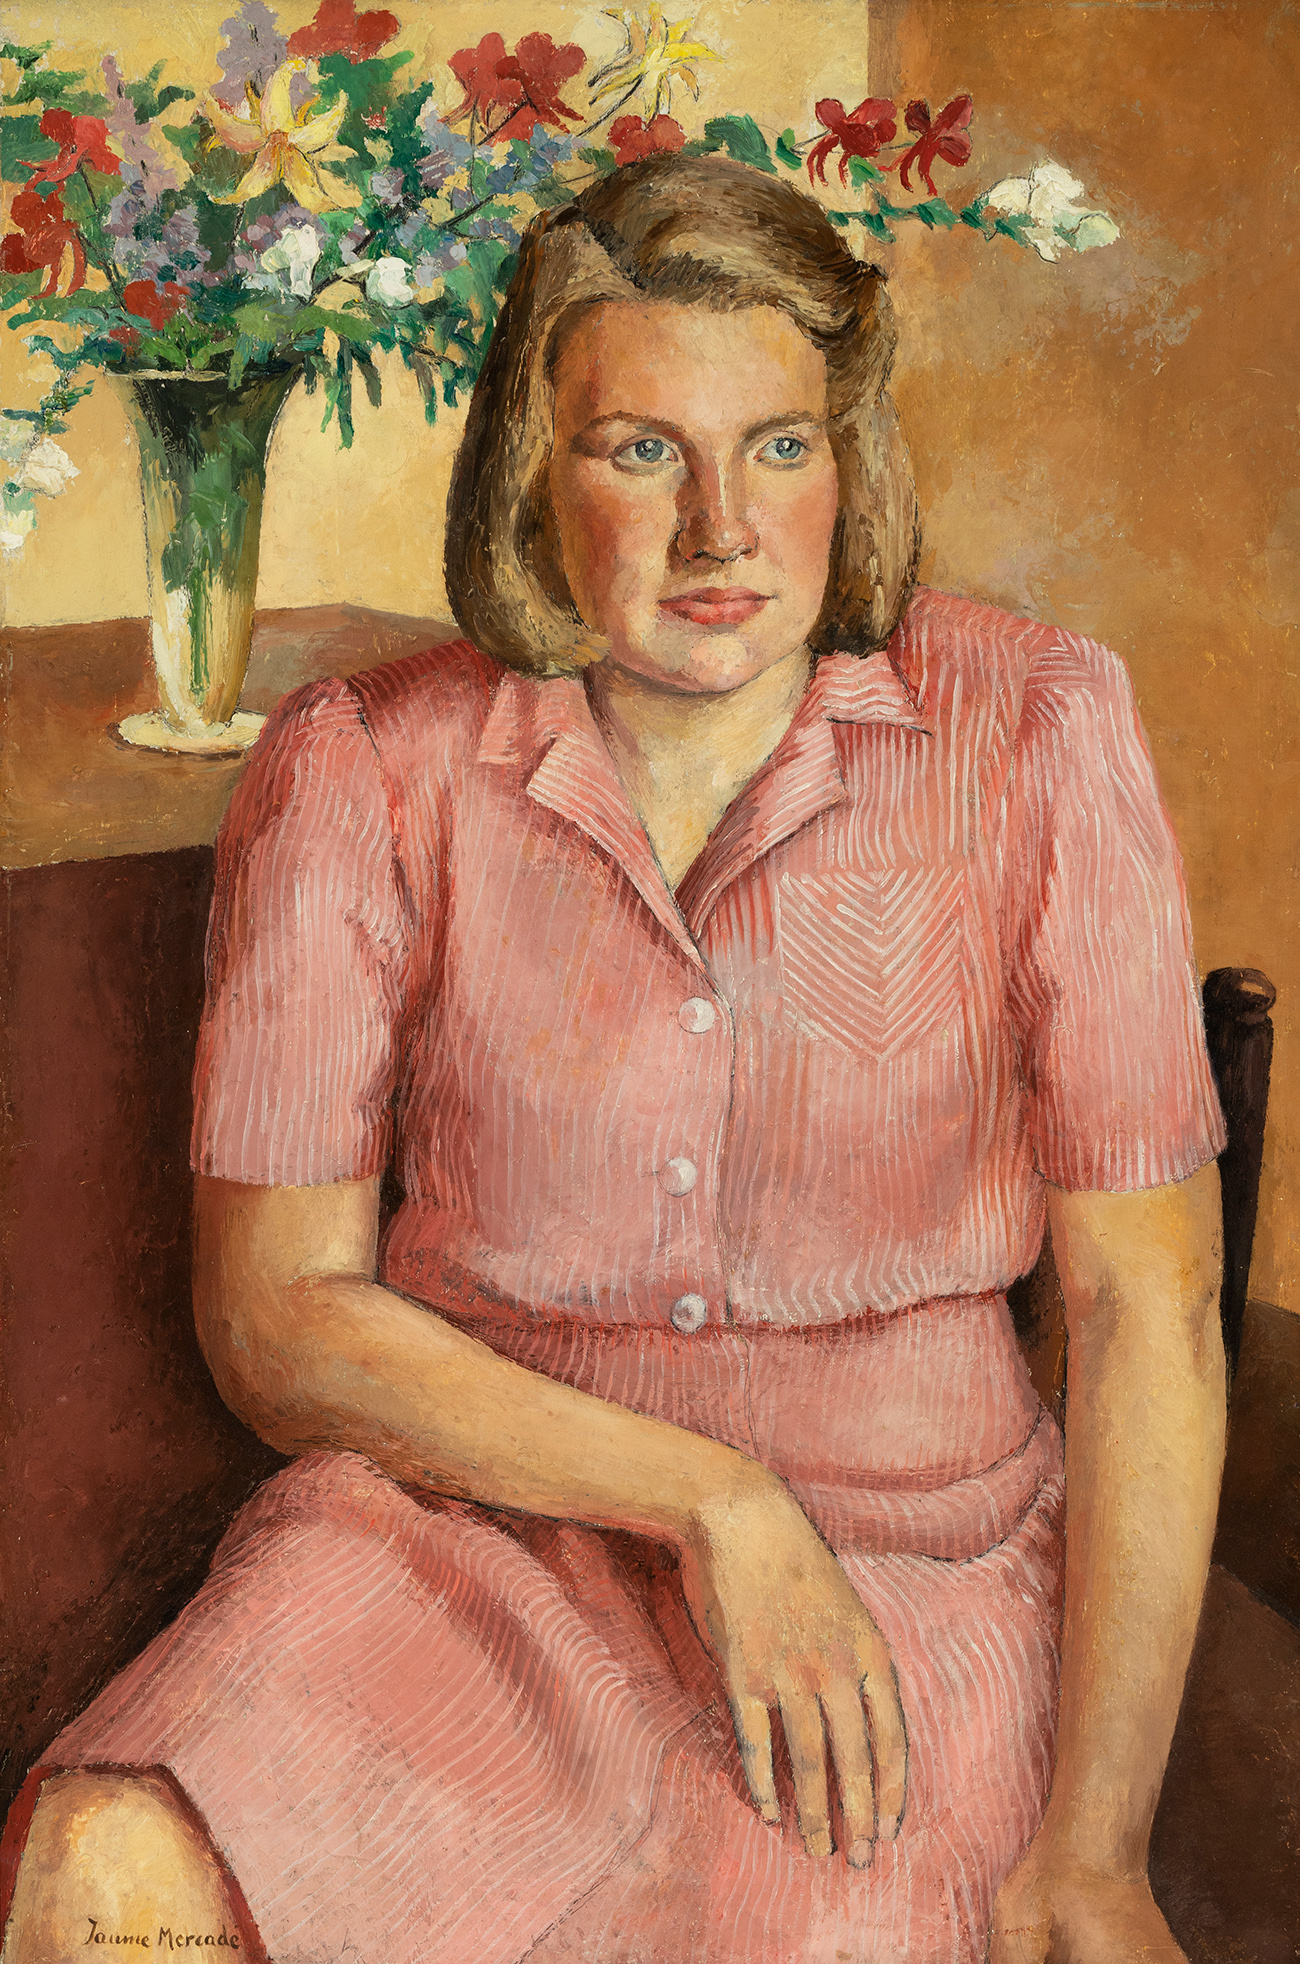 JAUME MERCADÉ QUERALT (Valls, Tarragona, 1887/89 – Barcelona, 1967)."Portrait of a Lady".Oil on